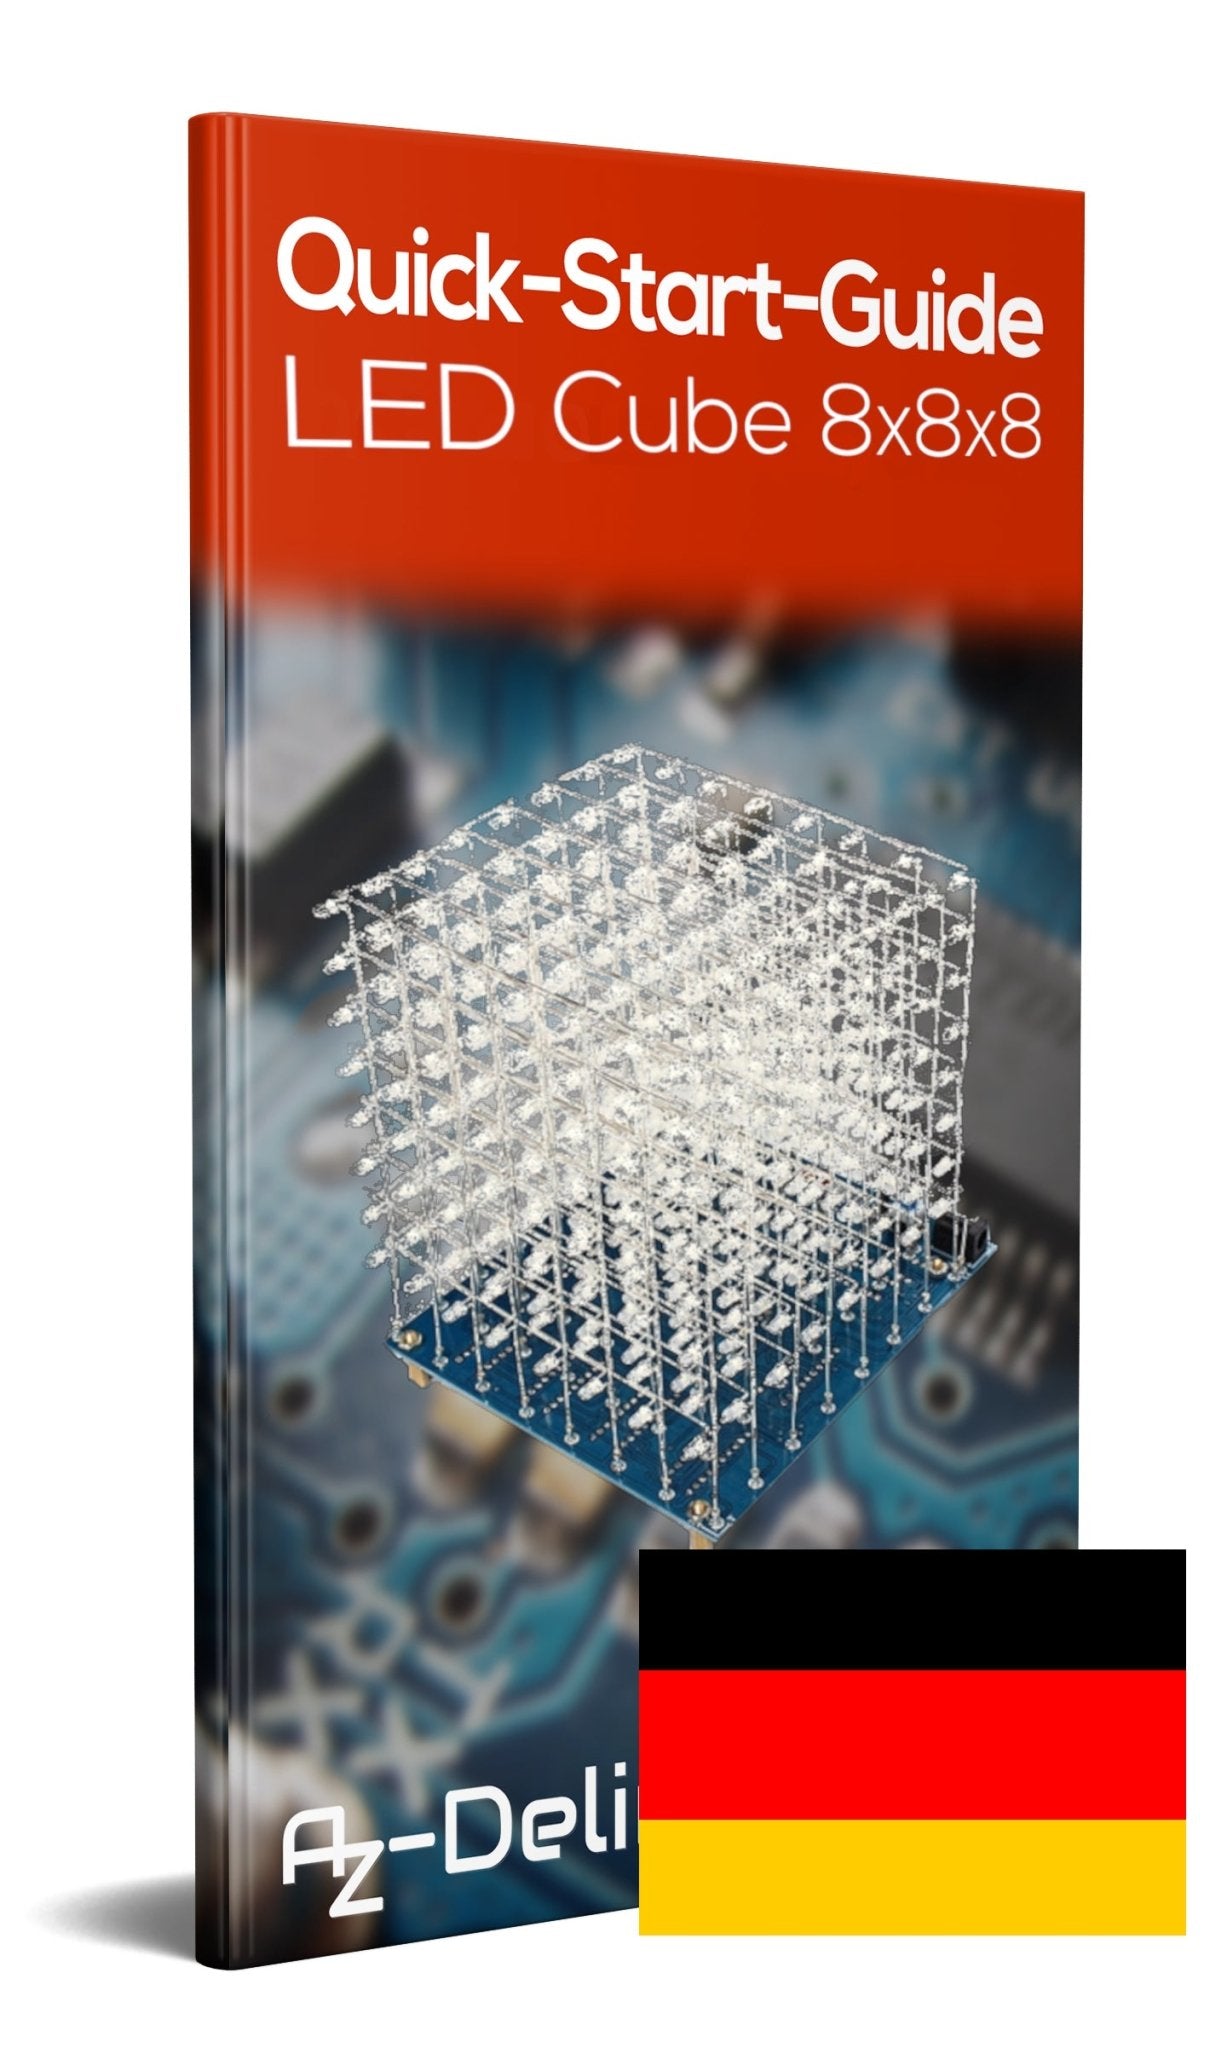 3D LED Cube 8 x 8 x 8 Cube Kit Light Matrix for Electronics Projects